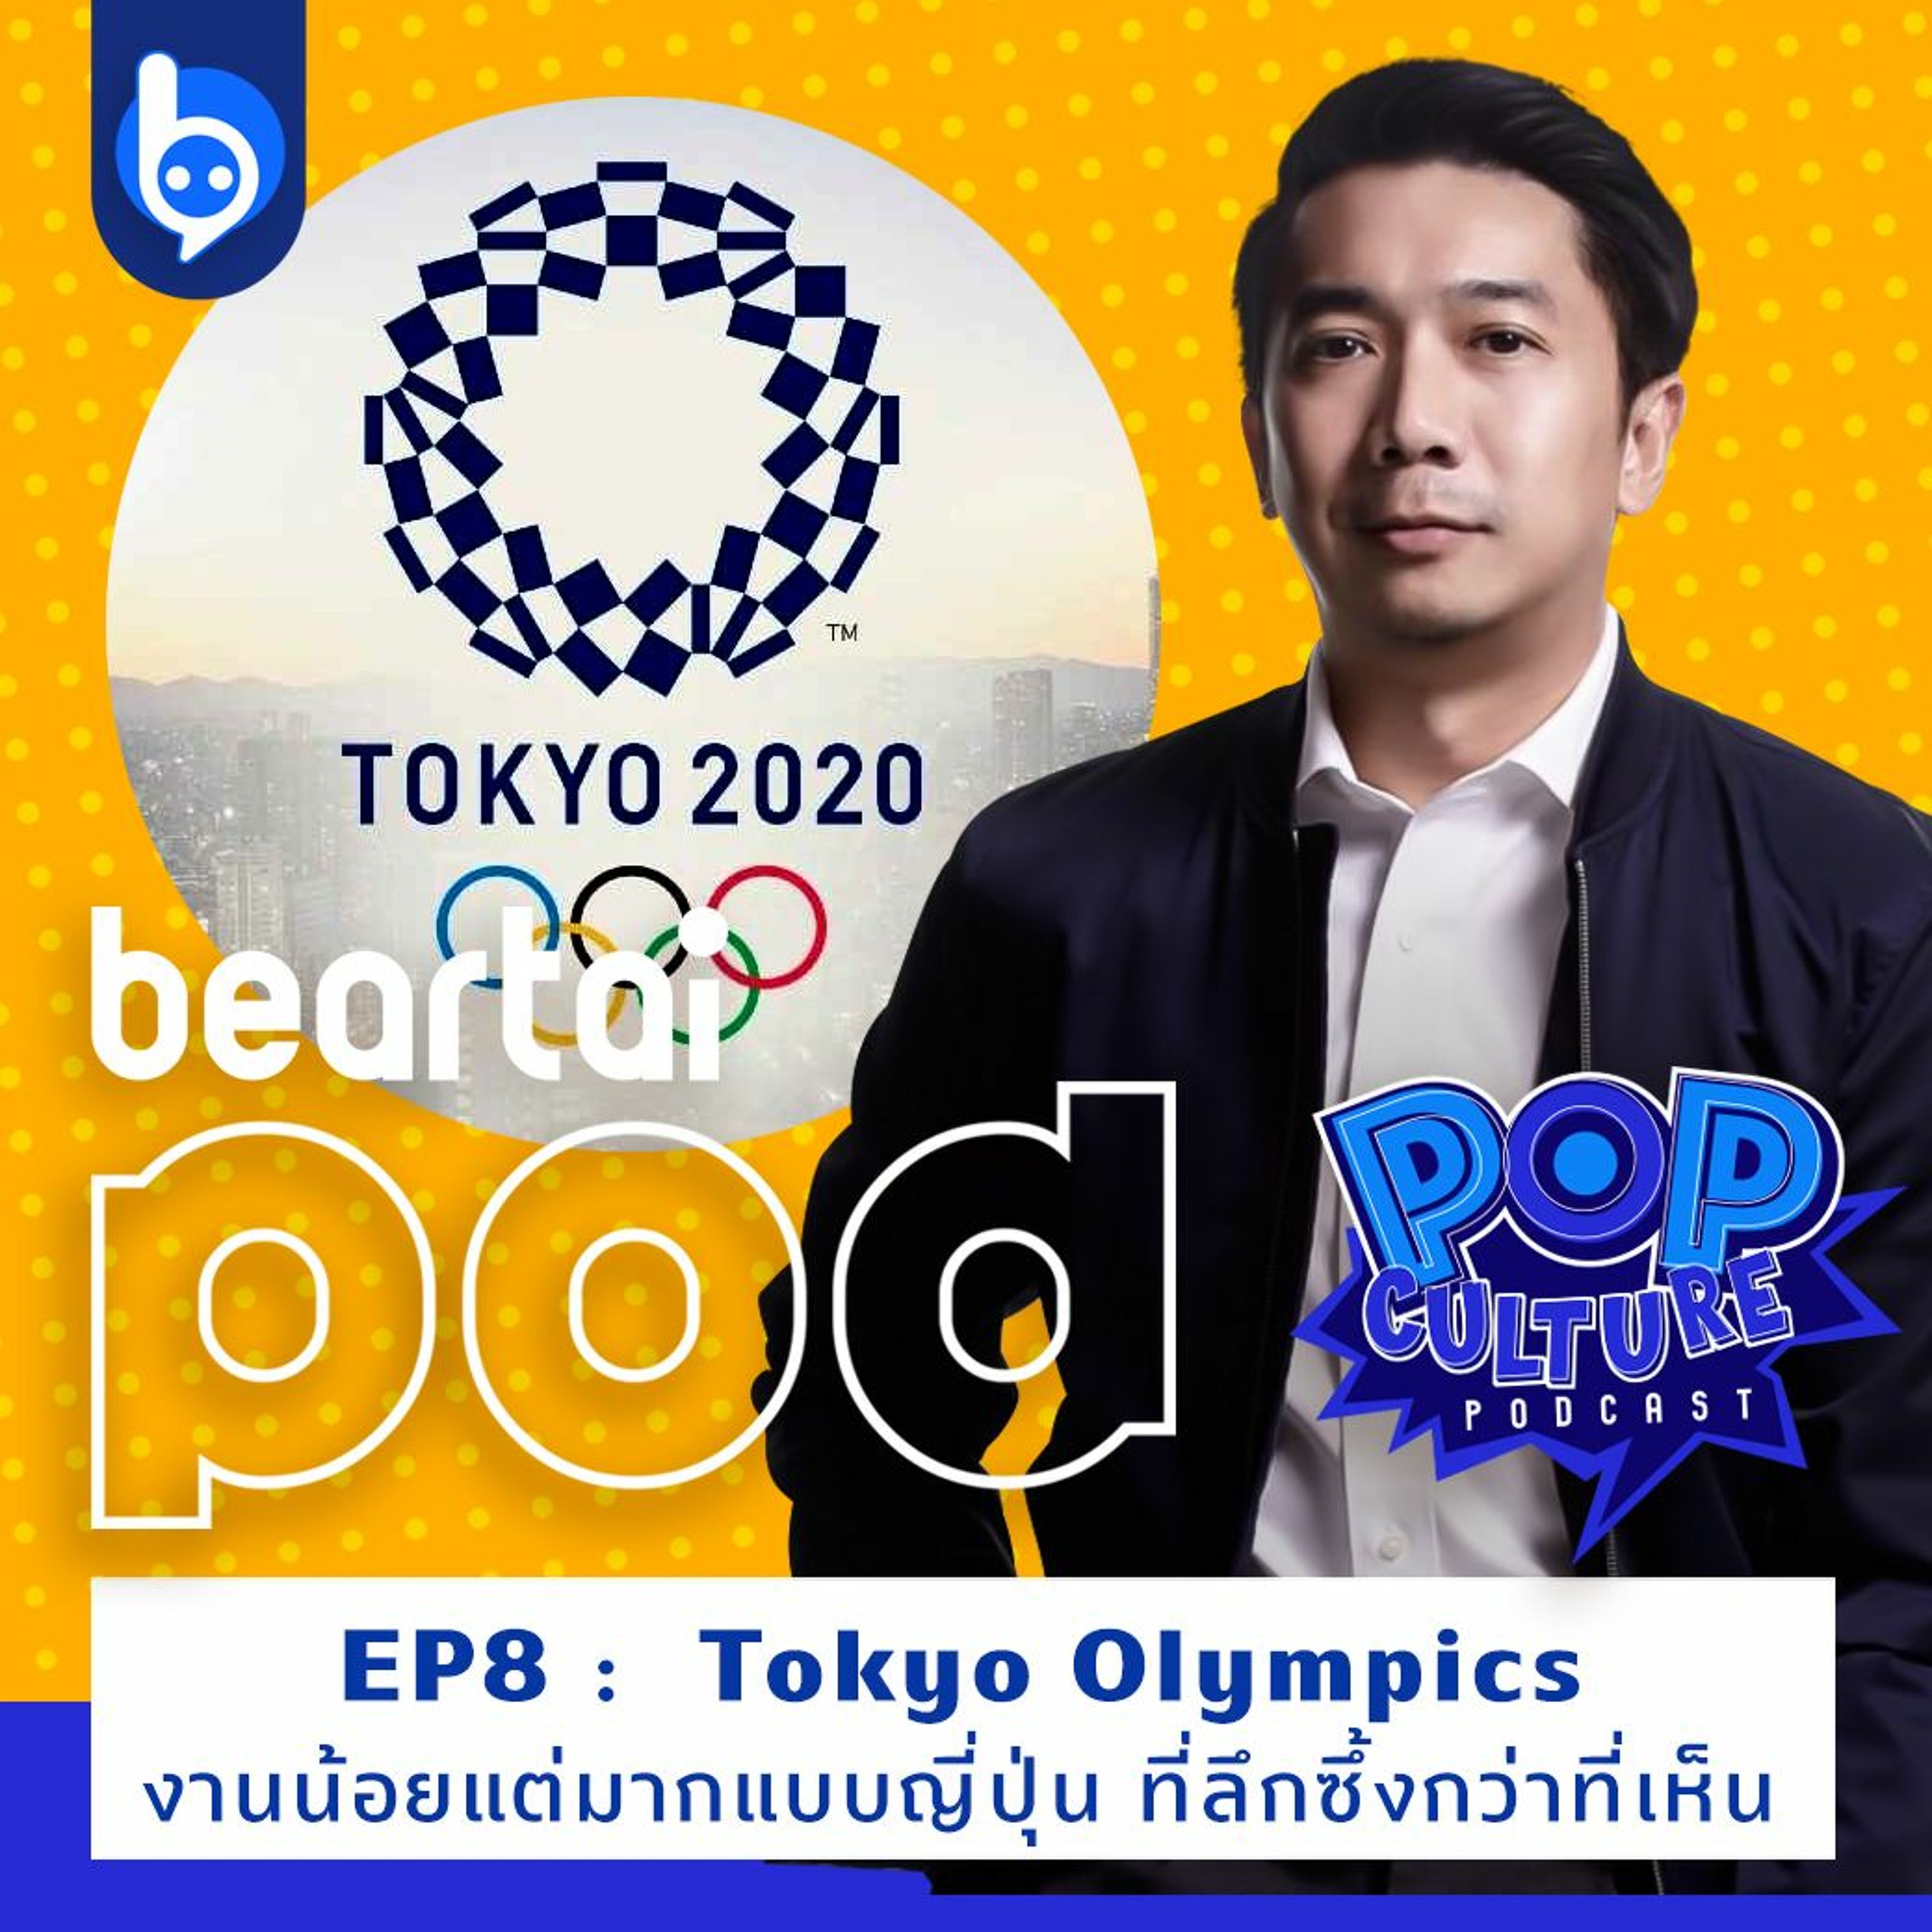 Pop Culture Podcast EP8 : Tokyo Olympics งานน้อยแต่มากแบบญี่ปุ่น